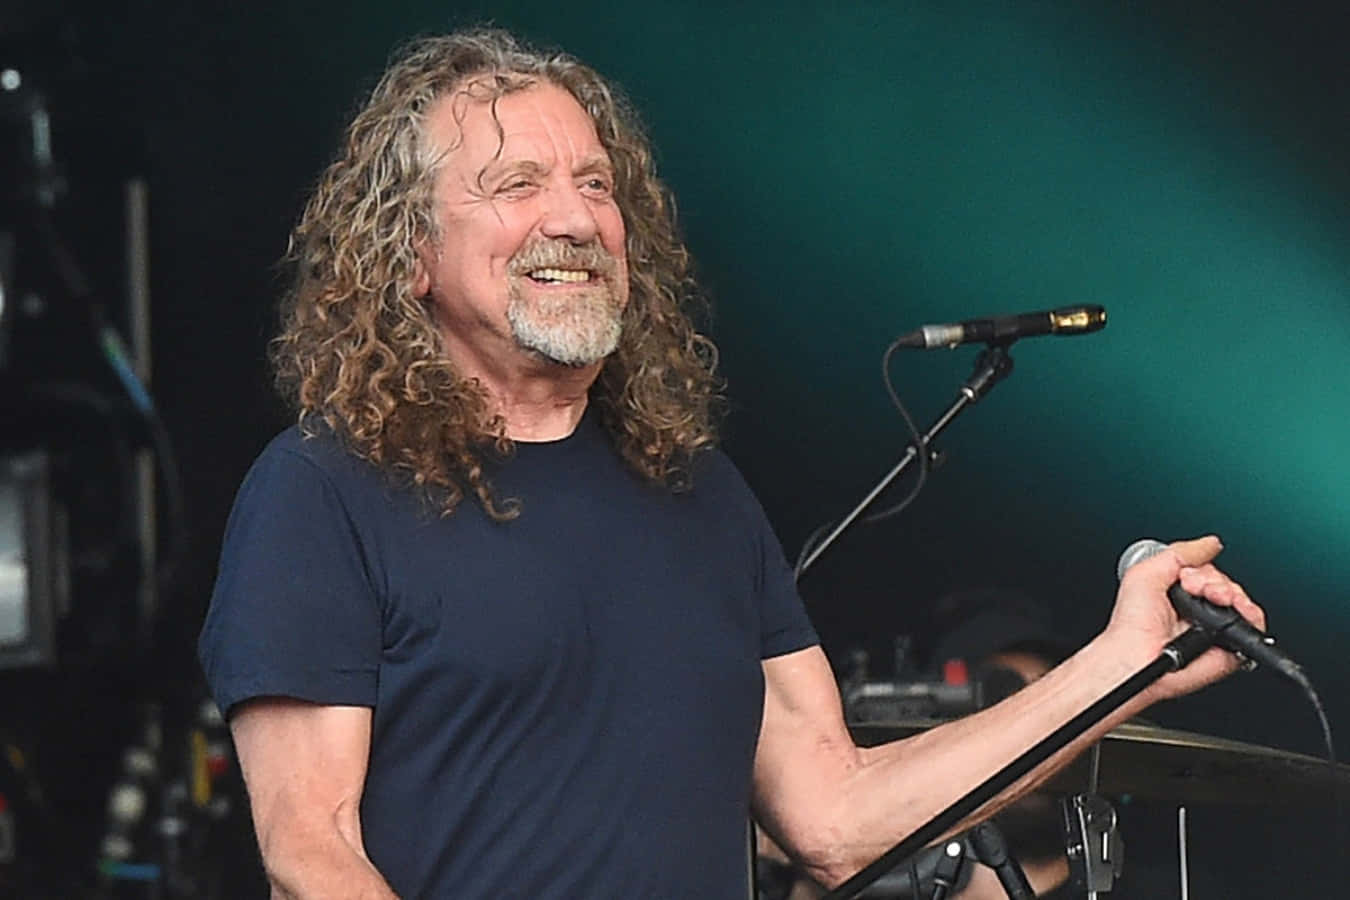 Legendary rocker Robert Plant performing